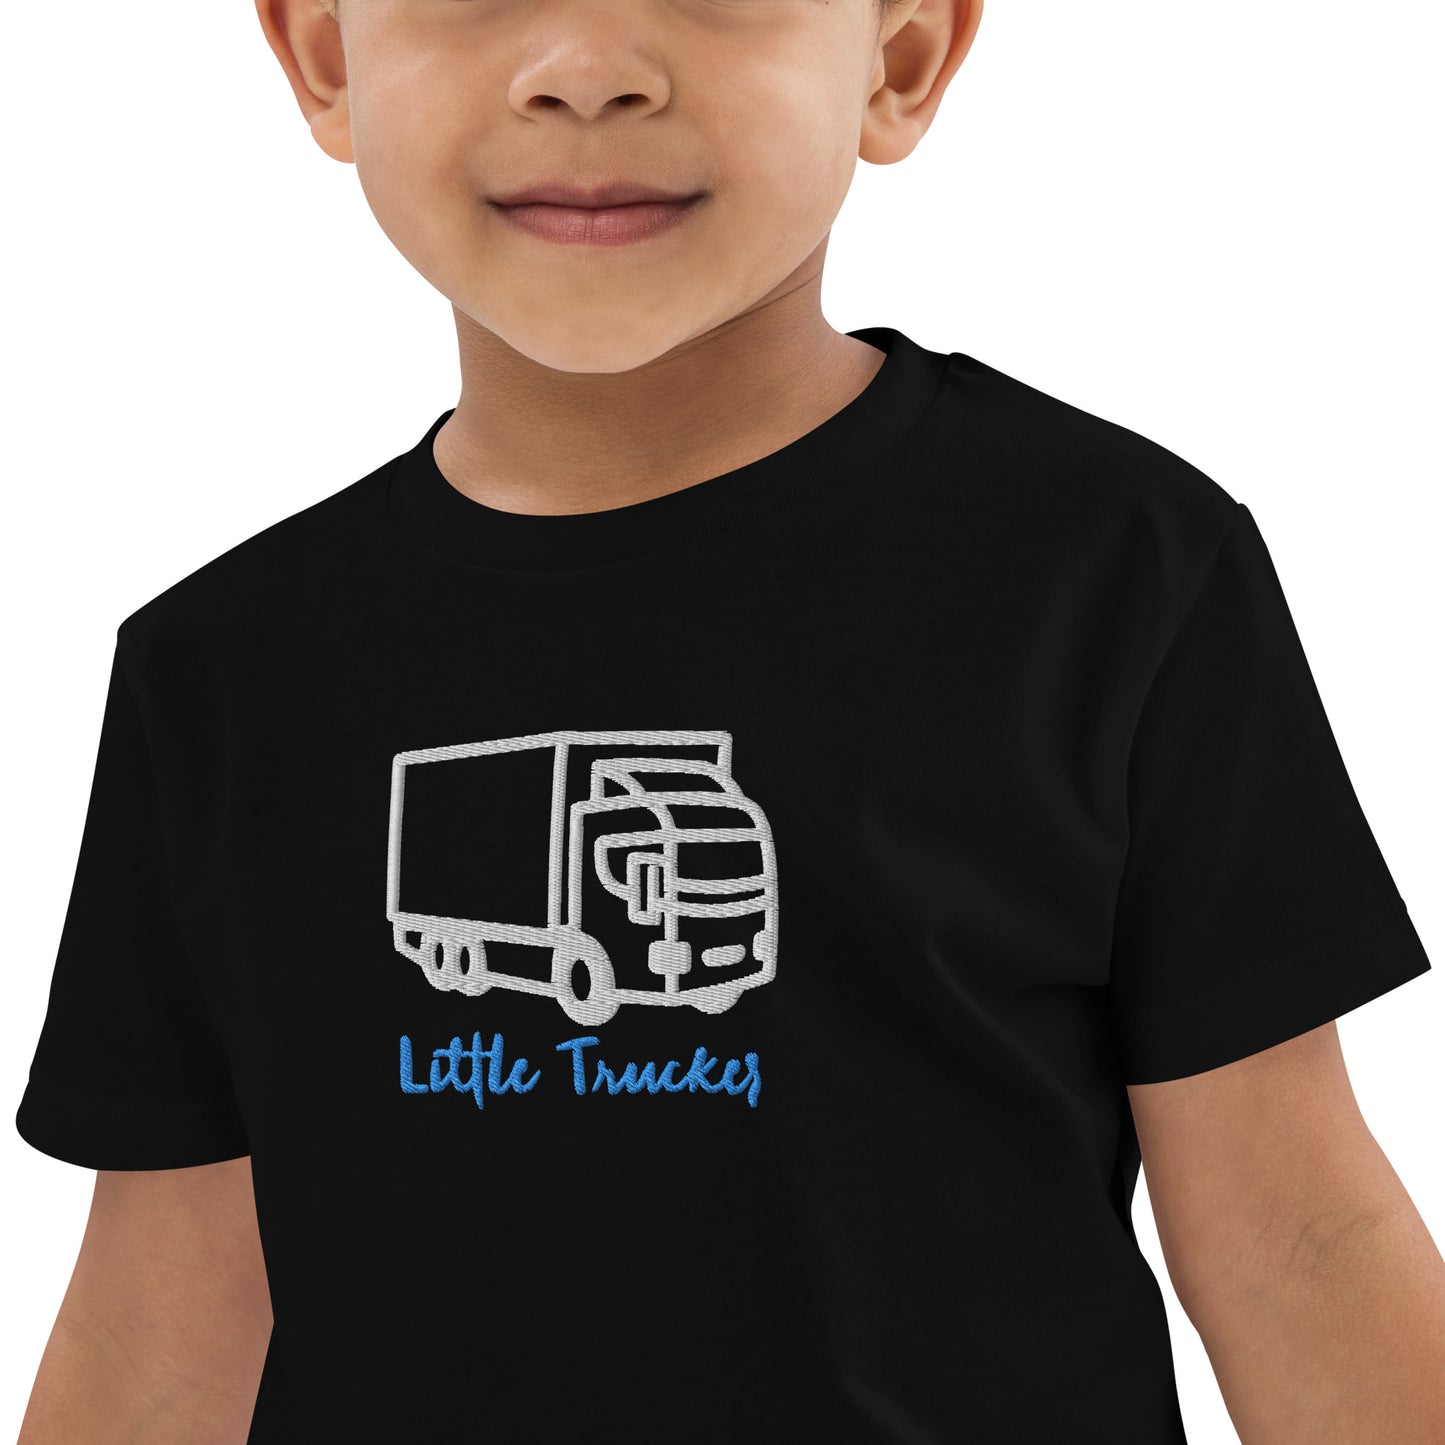 "Little trucker" children's t-shirt (ecological)